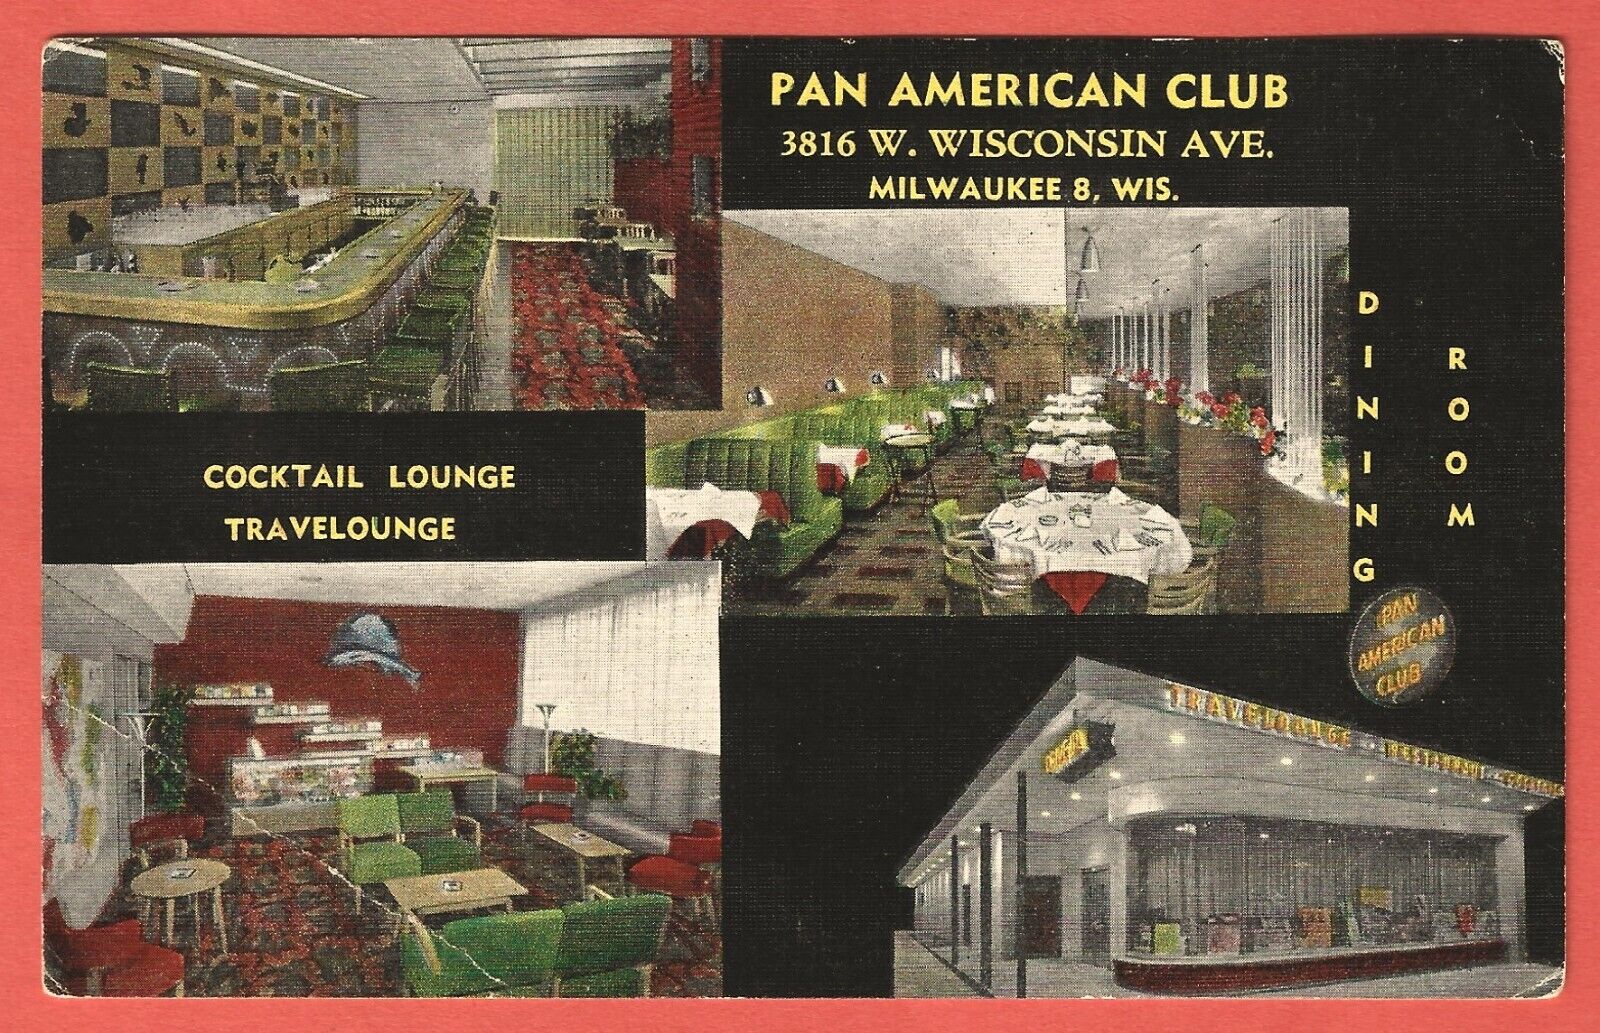 PAN AMERICAN CLUB, MILWAUKEE, WIS. – Closed 1968 - 1940s Linen Postcard